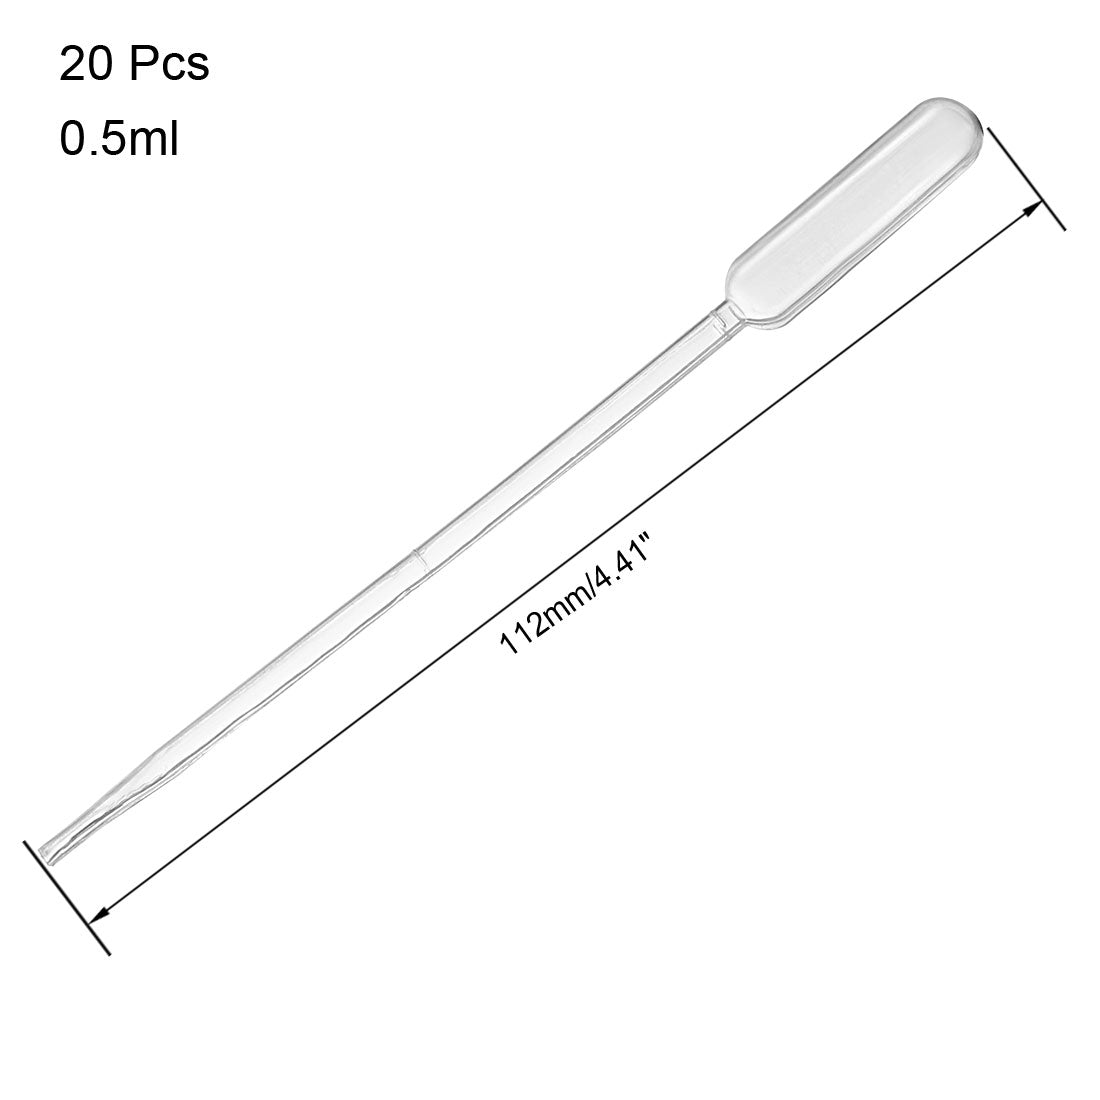 uxcell Uxcell 20 Pcs 0.5ml Disposable Pasteur Pipettes Test Tubes Liquid Drop Droppers 112mm Long